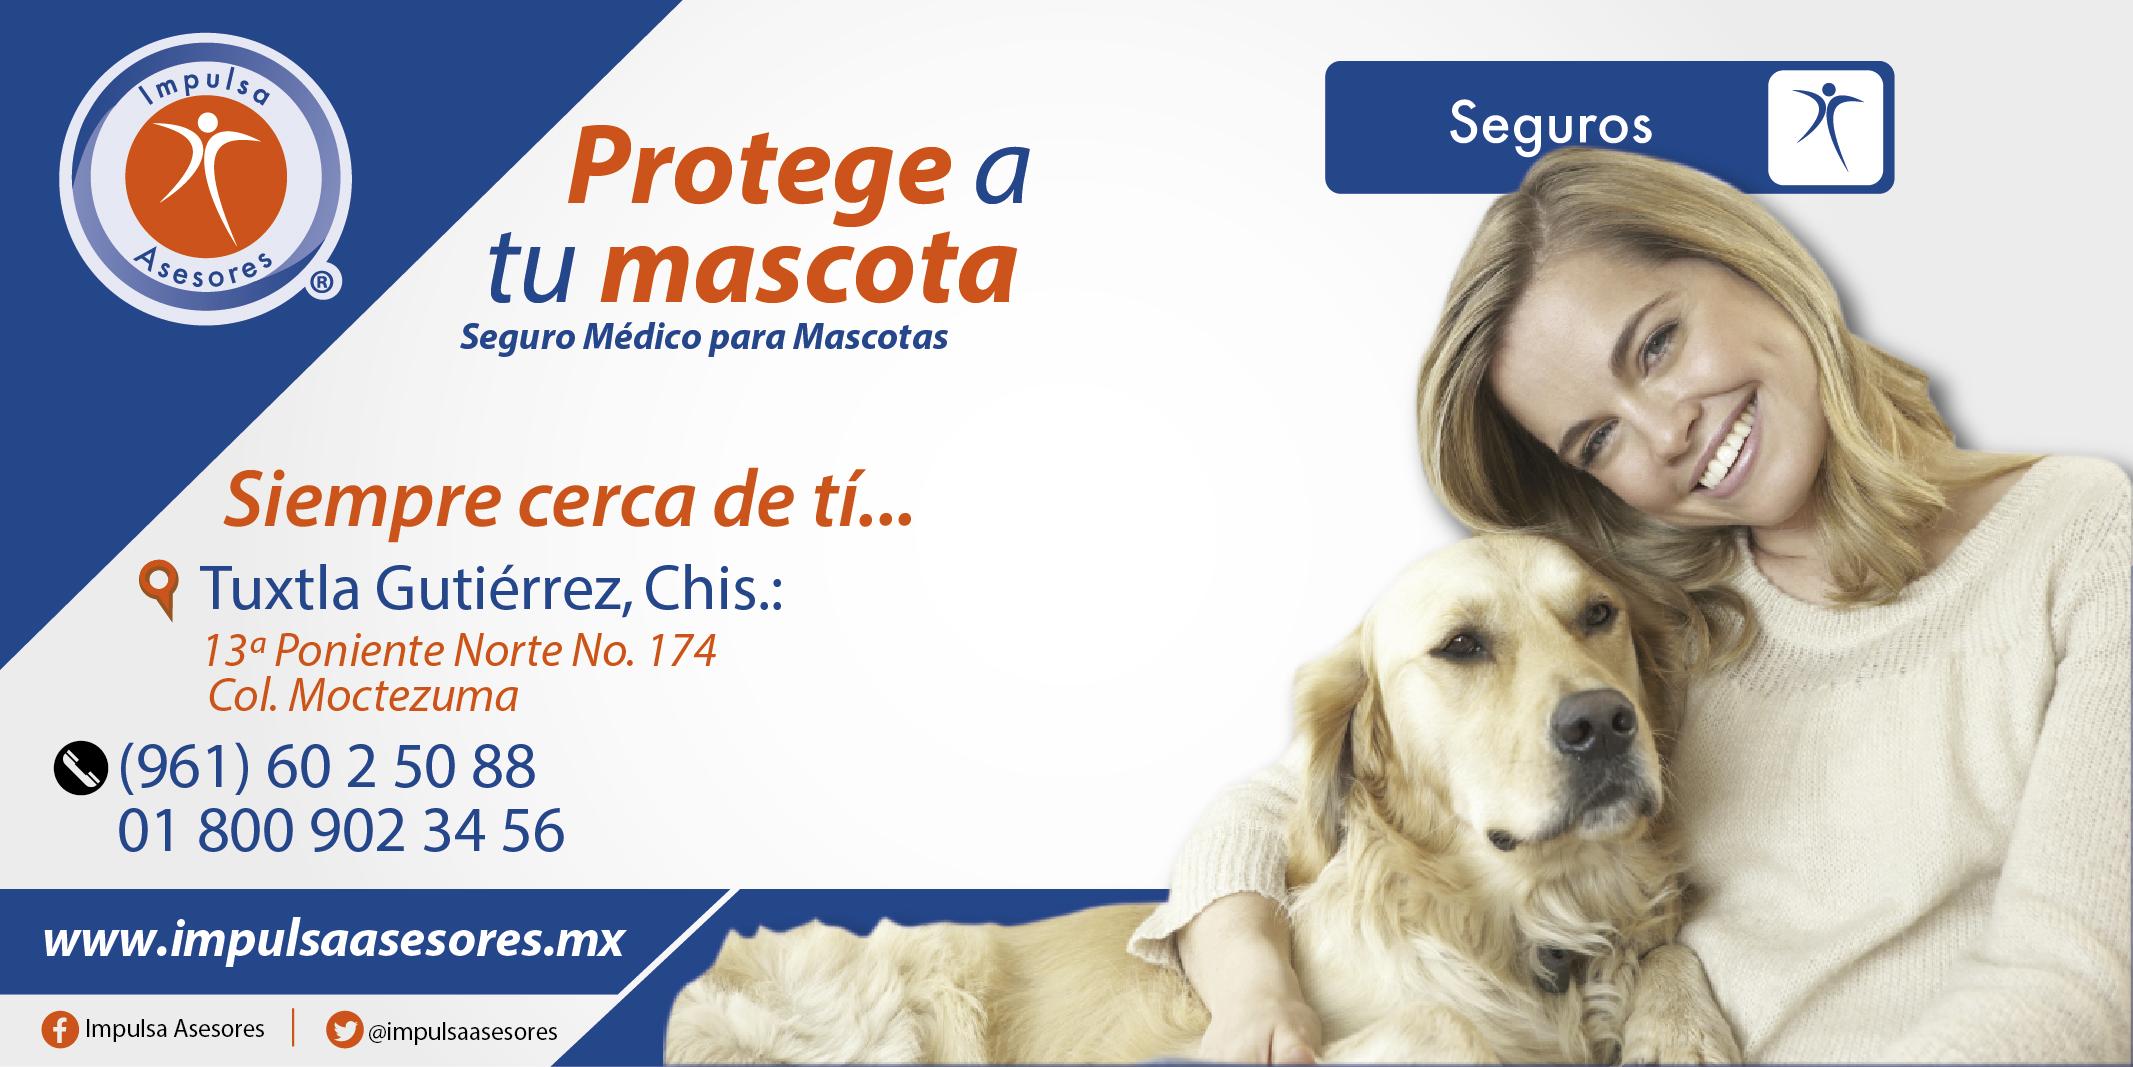 Delicioso Reino elegante Impulsa Asesores on Twitter: "#AFaltaDePalabras ¡Protege tu Mascota! Conoce  el seguro medico para mascotas ¡Cotiza por MD! #PET http://t.co/kKBTaTBy7t"  / Twitter